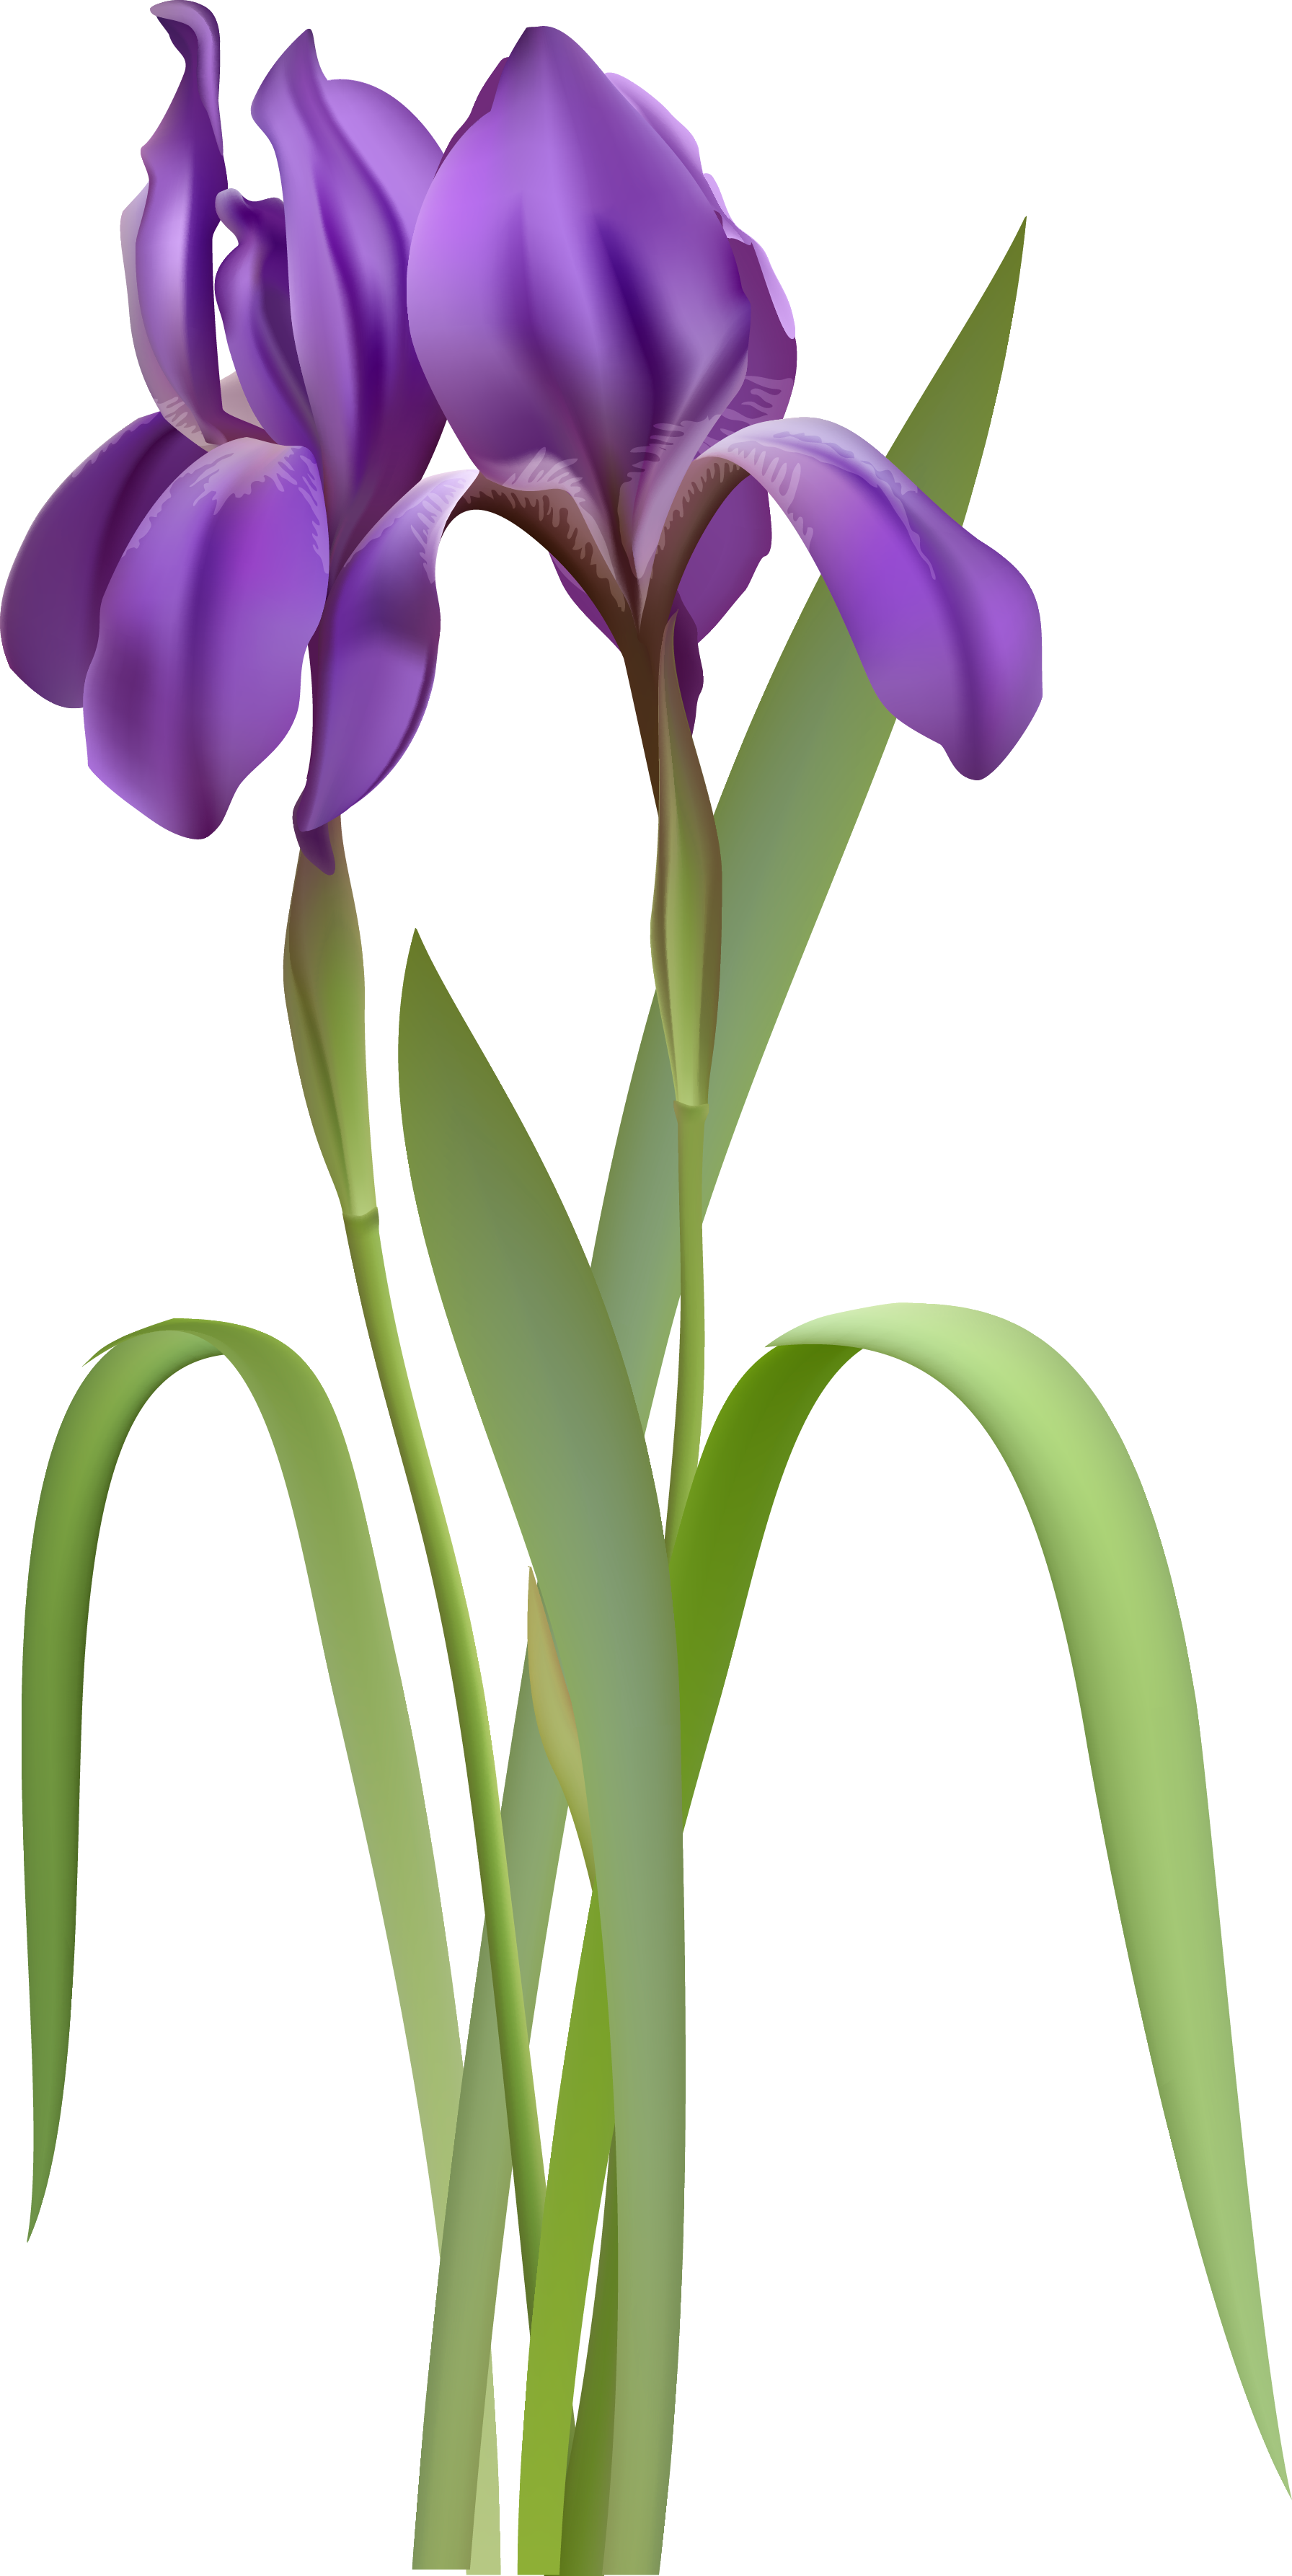 Bunch of blue irises isolated